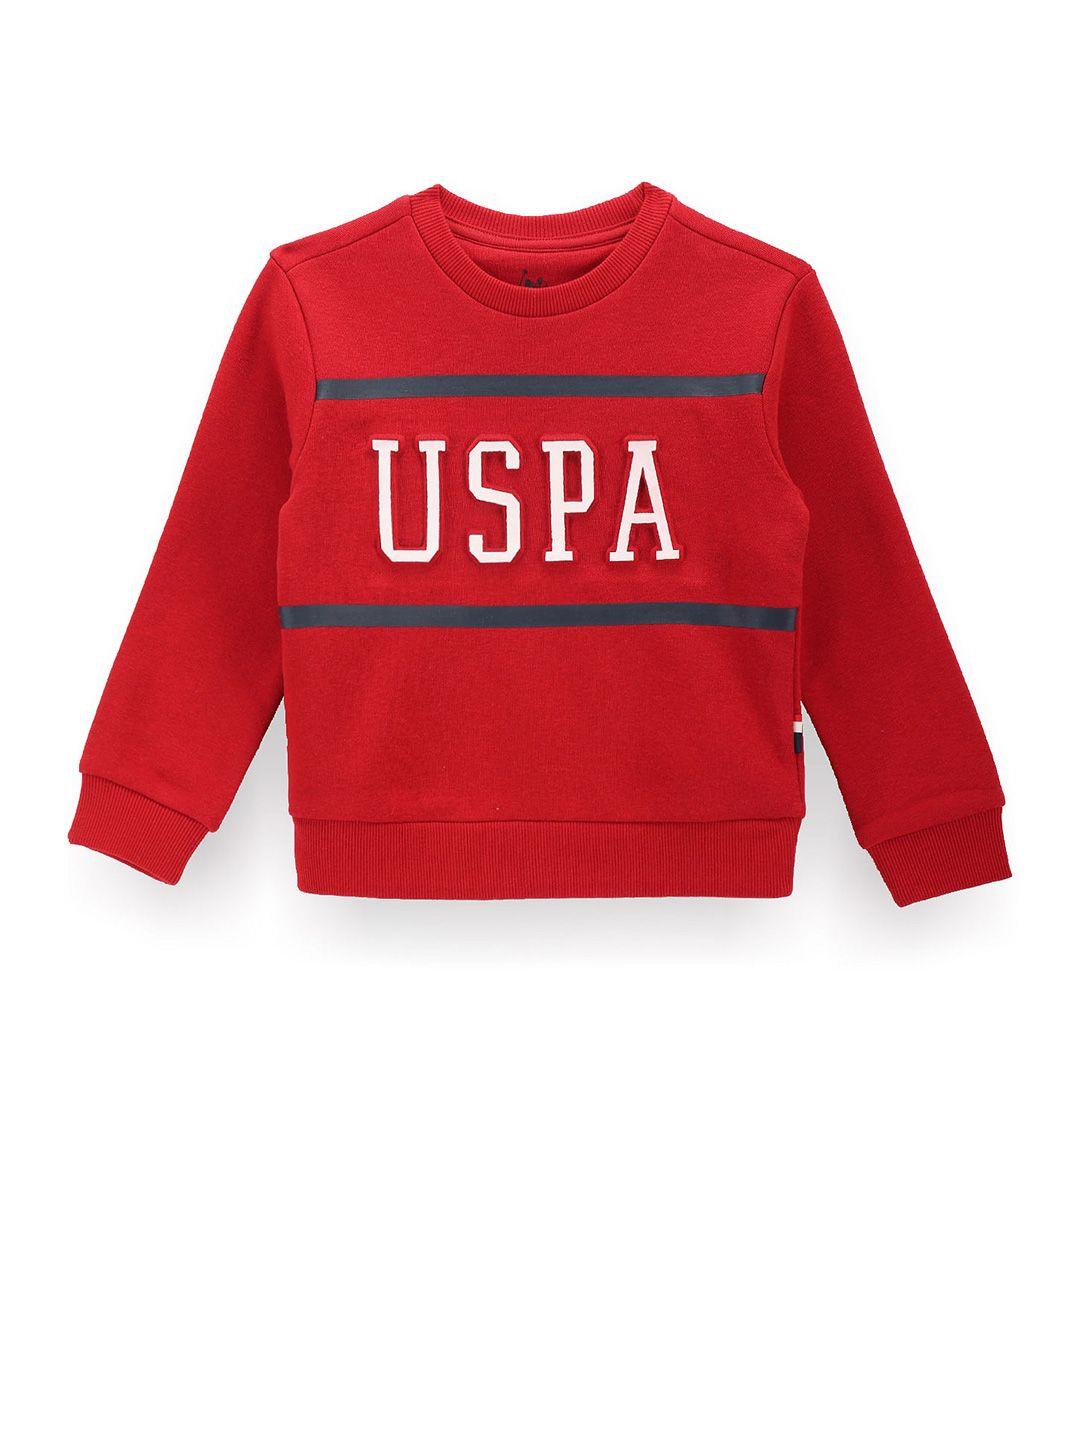 u.s. polo assn. kids boys typography printed pullover sweatshirt